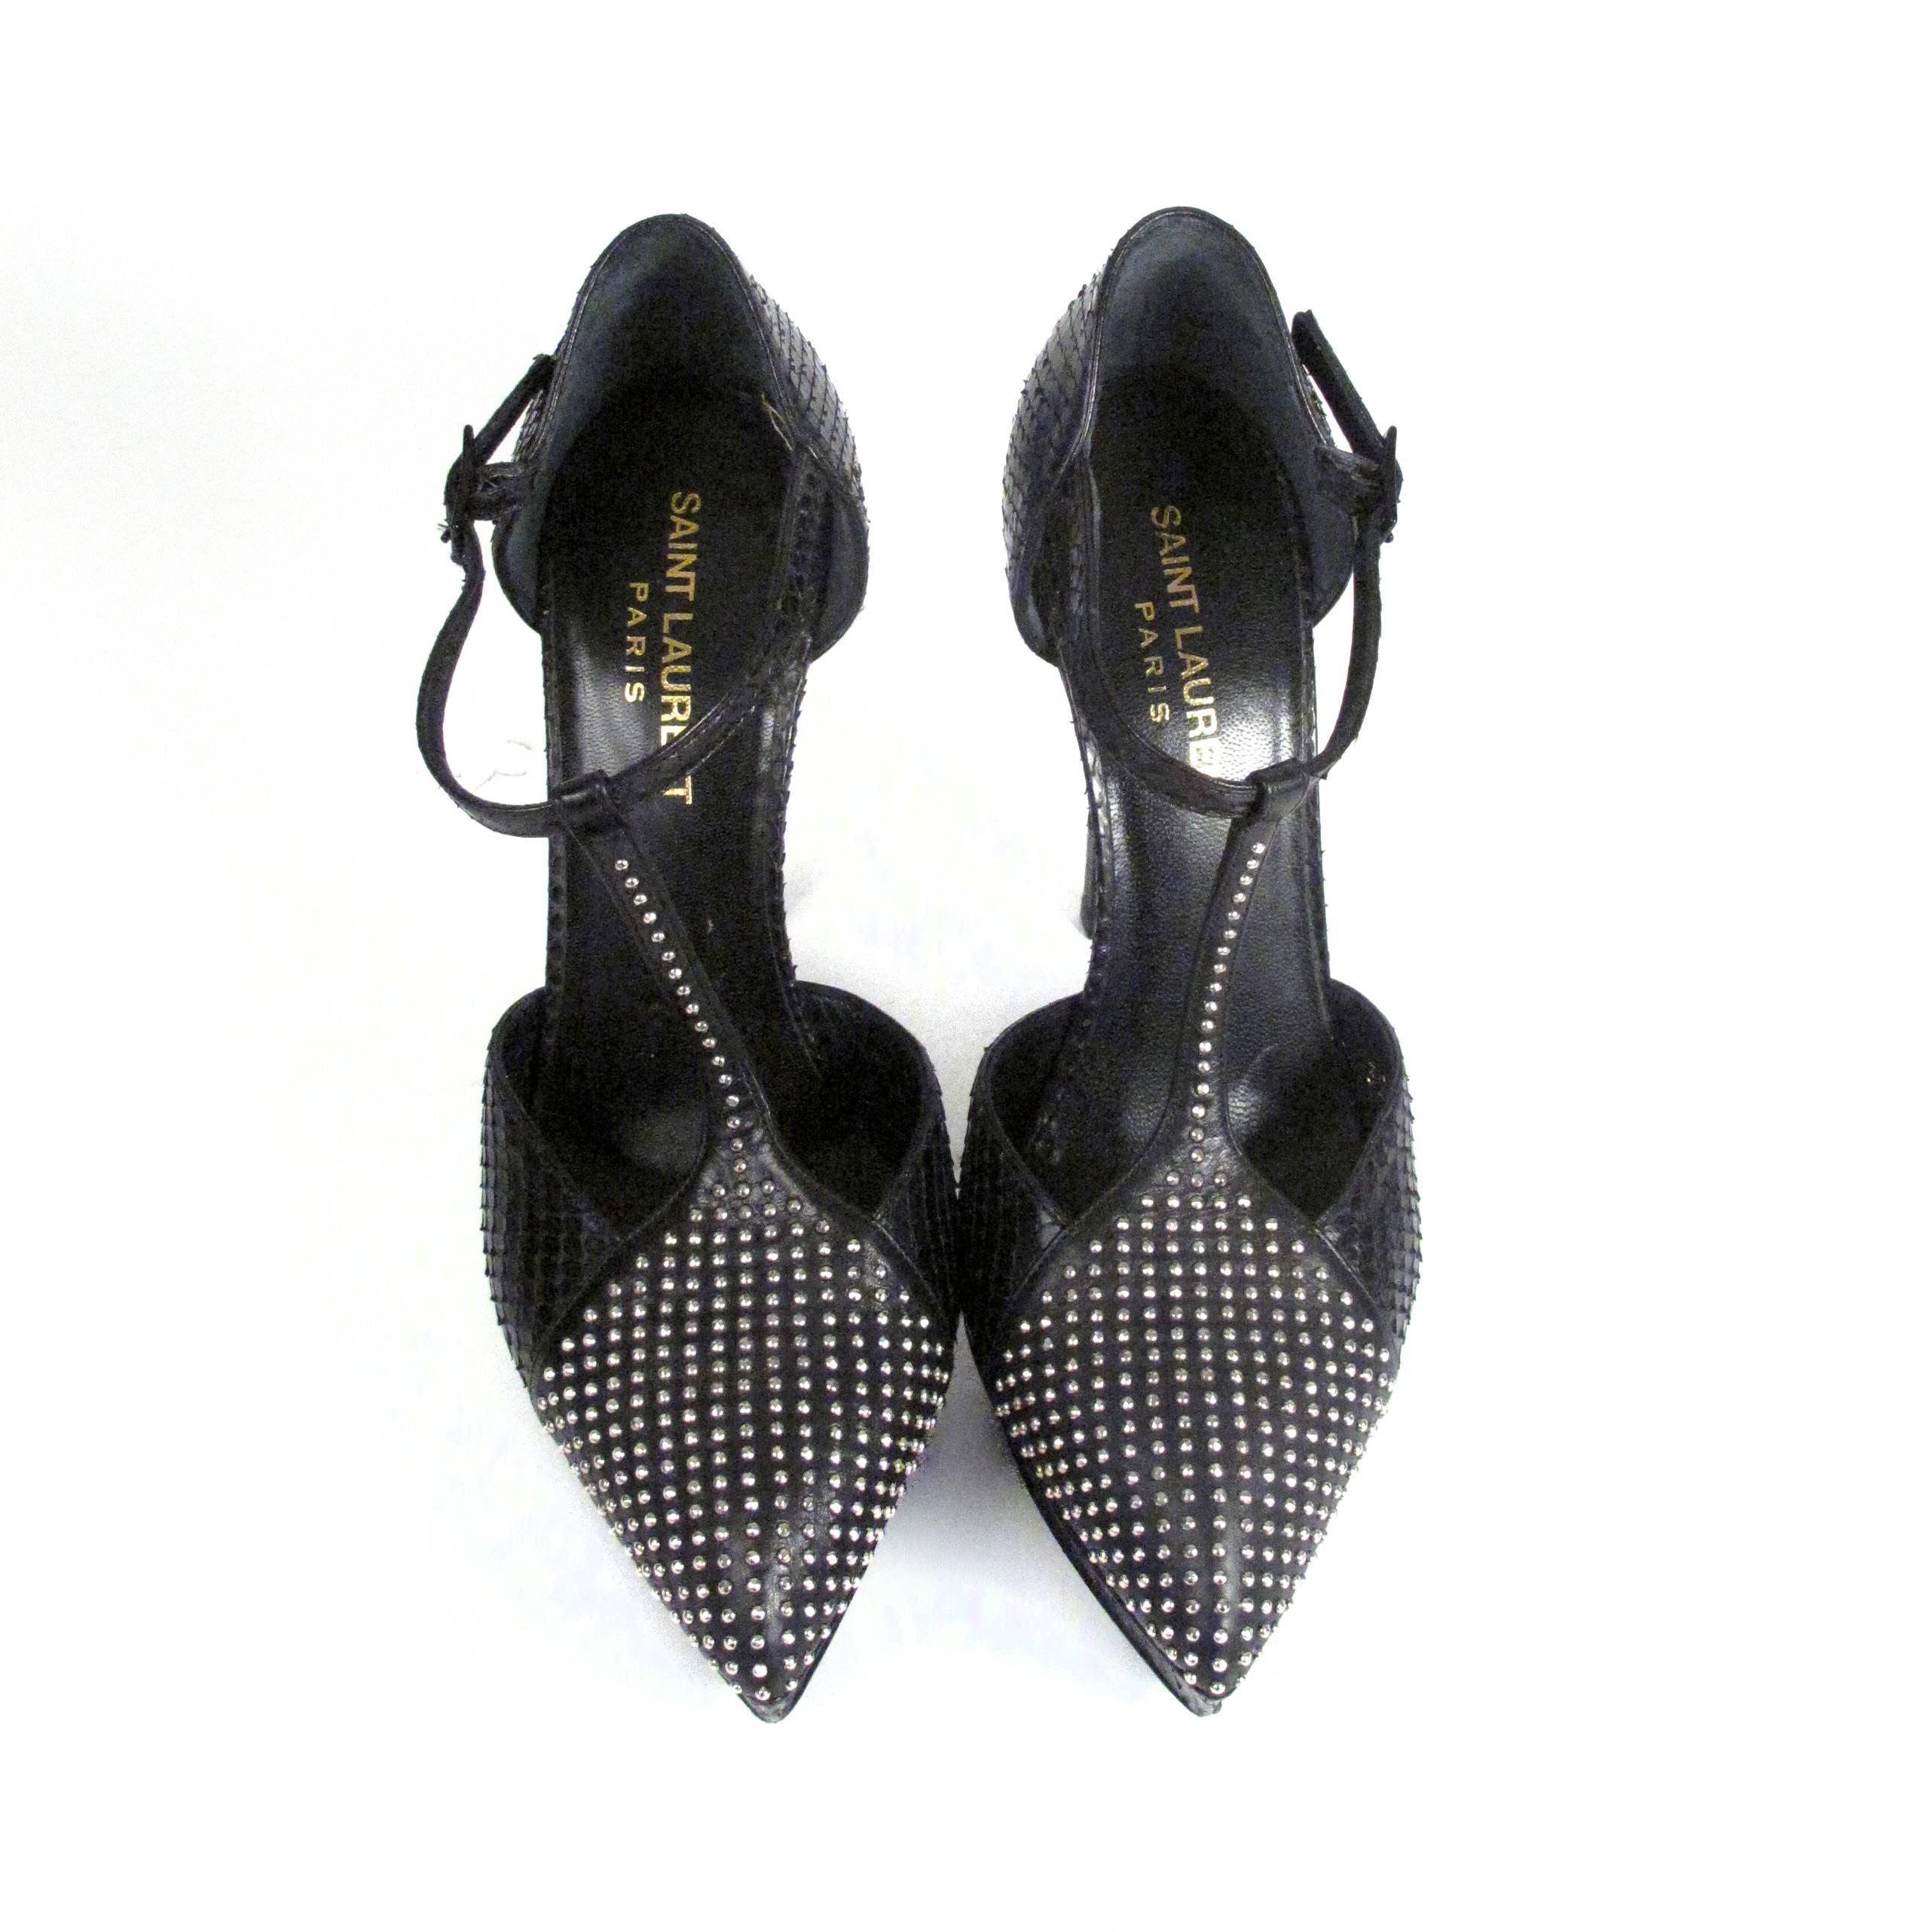 Saint Laurent - Janis - Python Studded Strap Heels

Retail: $2000.00

Size: US 6 - 36

Color: Black

Material: Leather & Metal

------------------------------------------------------------

Details:

- silver tone studs at toe

-